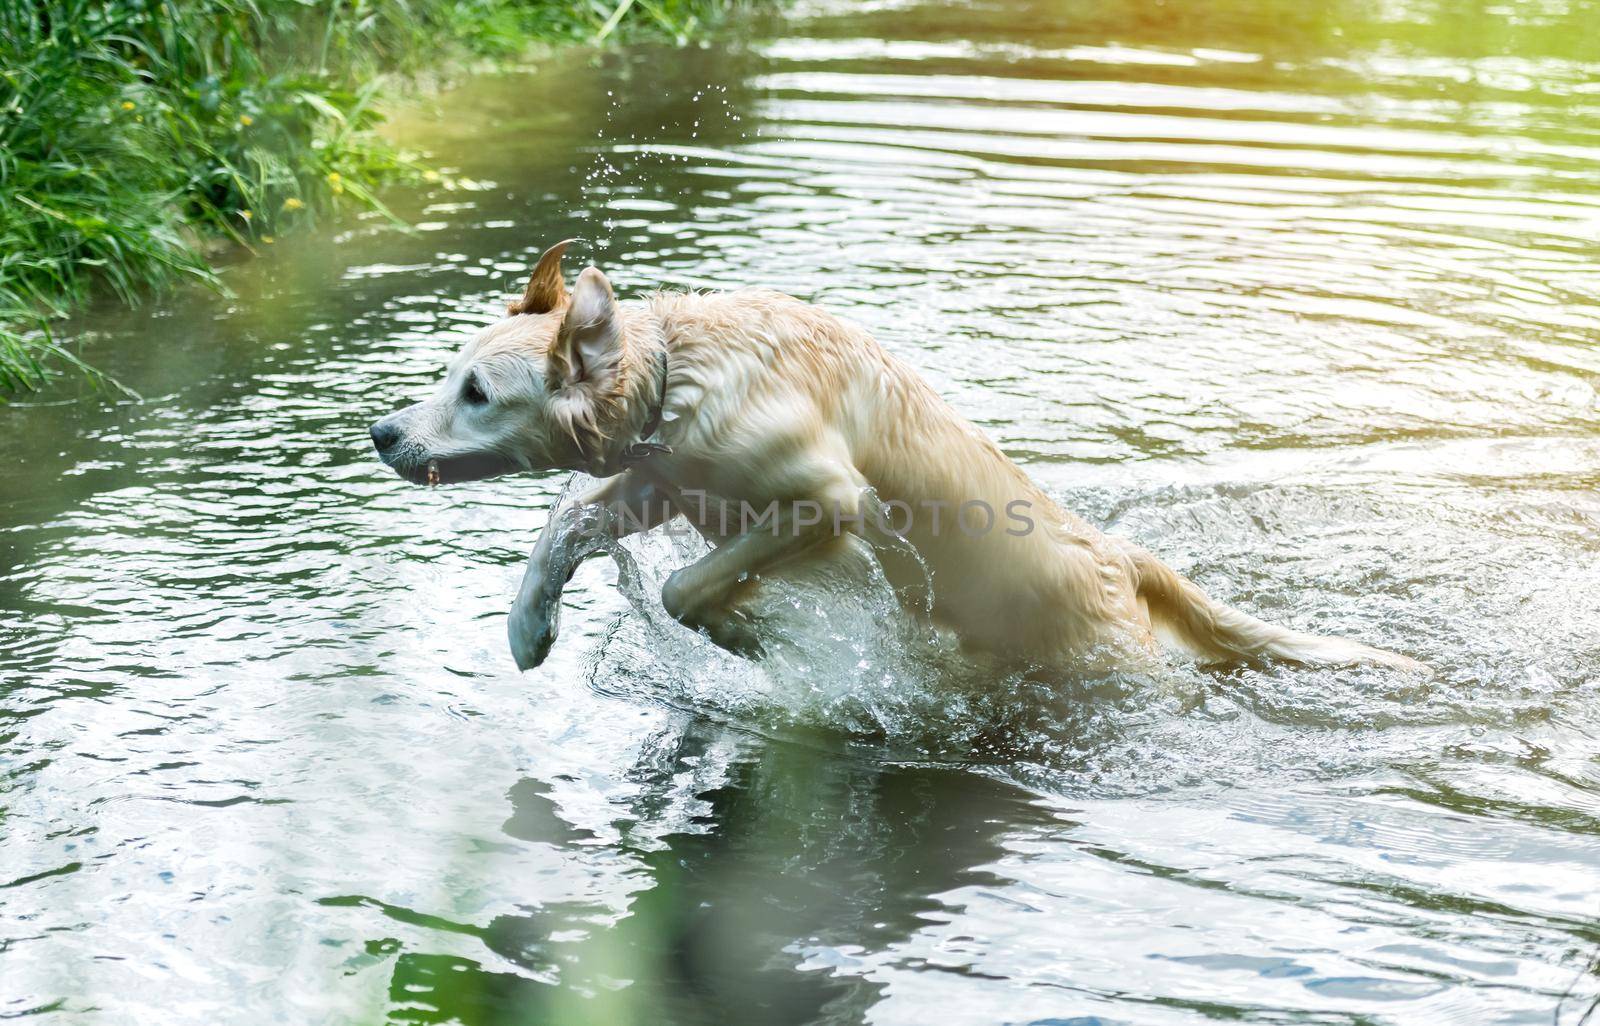 Lovely dog having fun in river by tan4ikk1